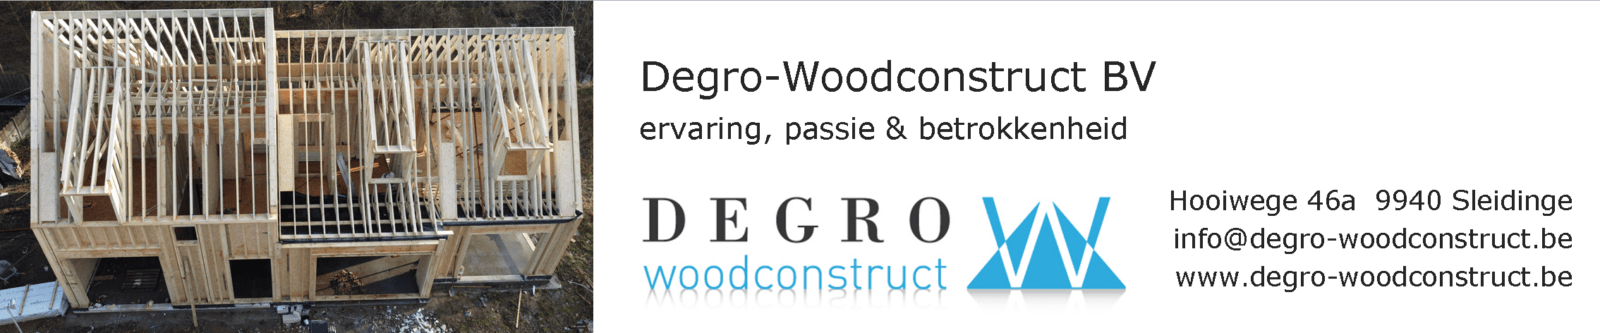 Degro Wood banner 1920x400